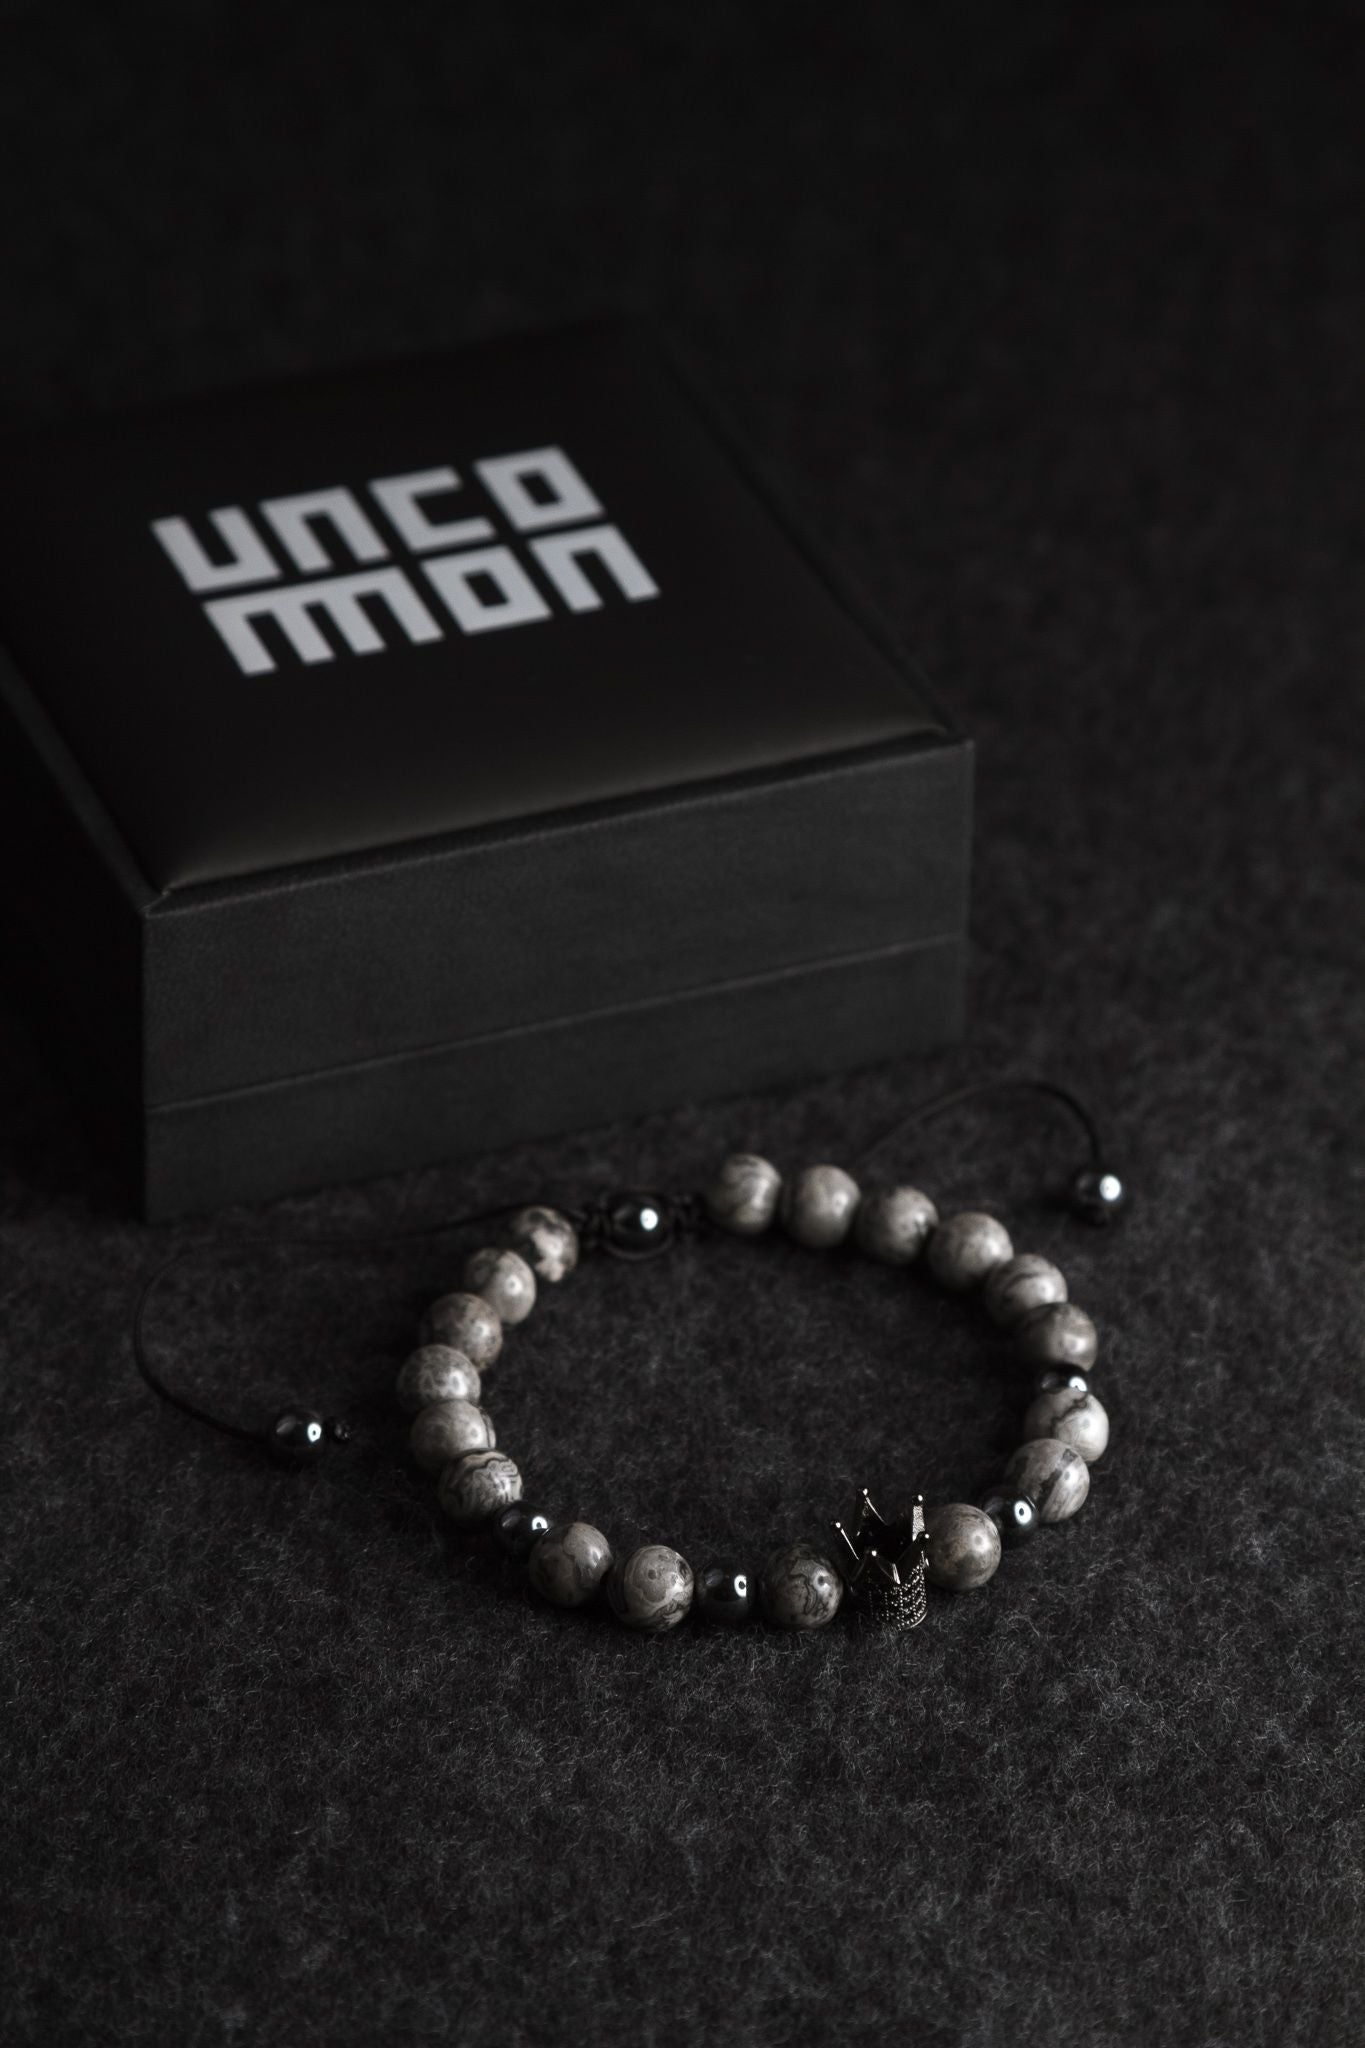 UNCOMMON Men's Beads Bracelet One Pewter Crown Charm Grey Jasper Stone Beads